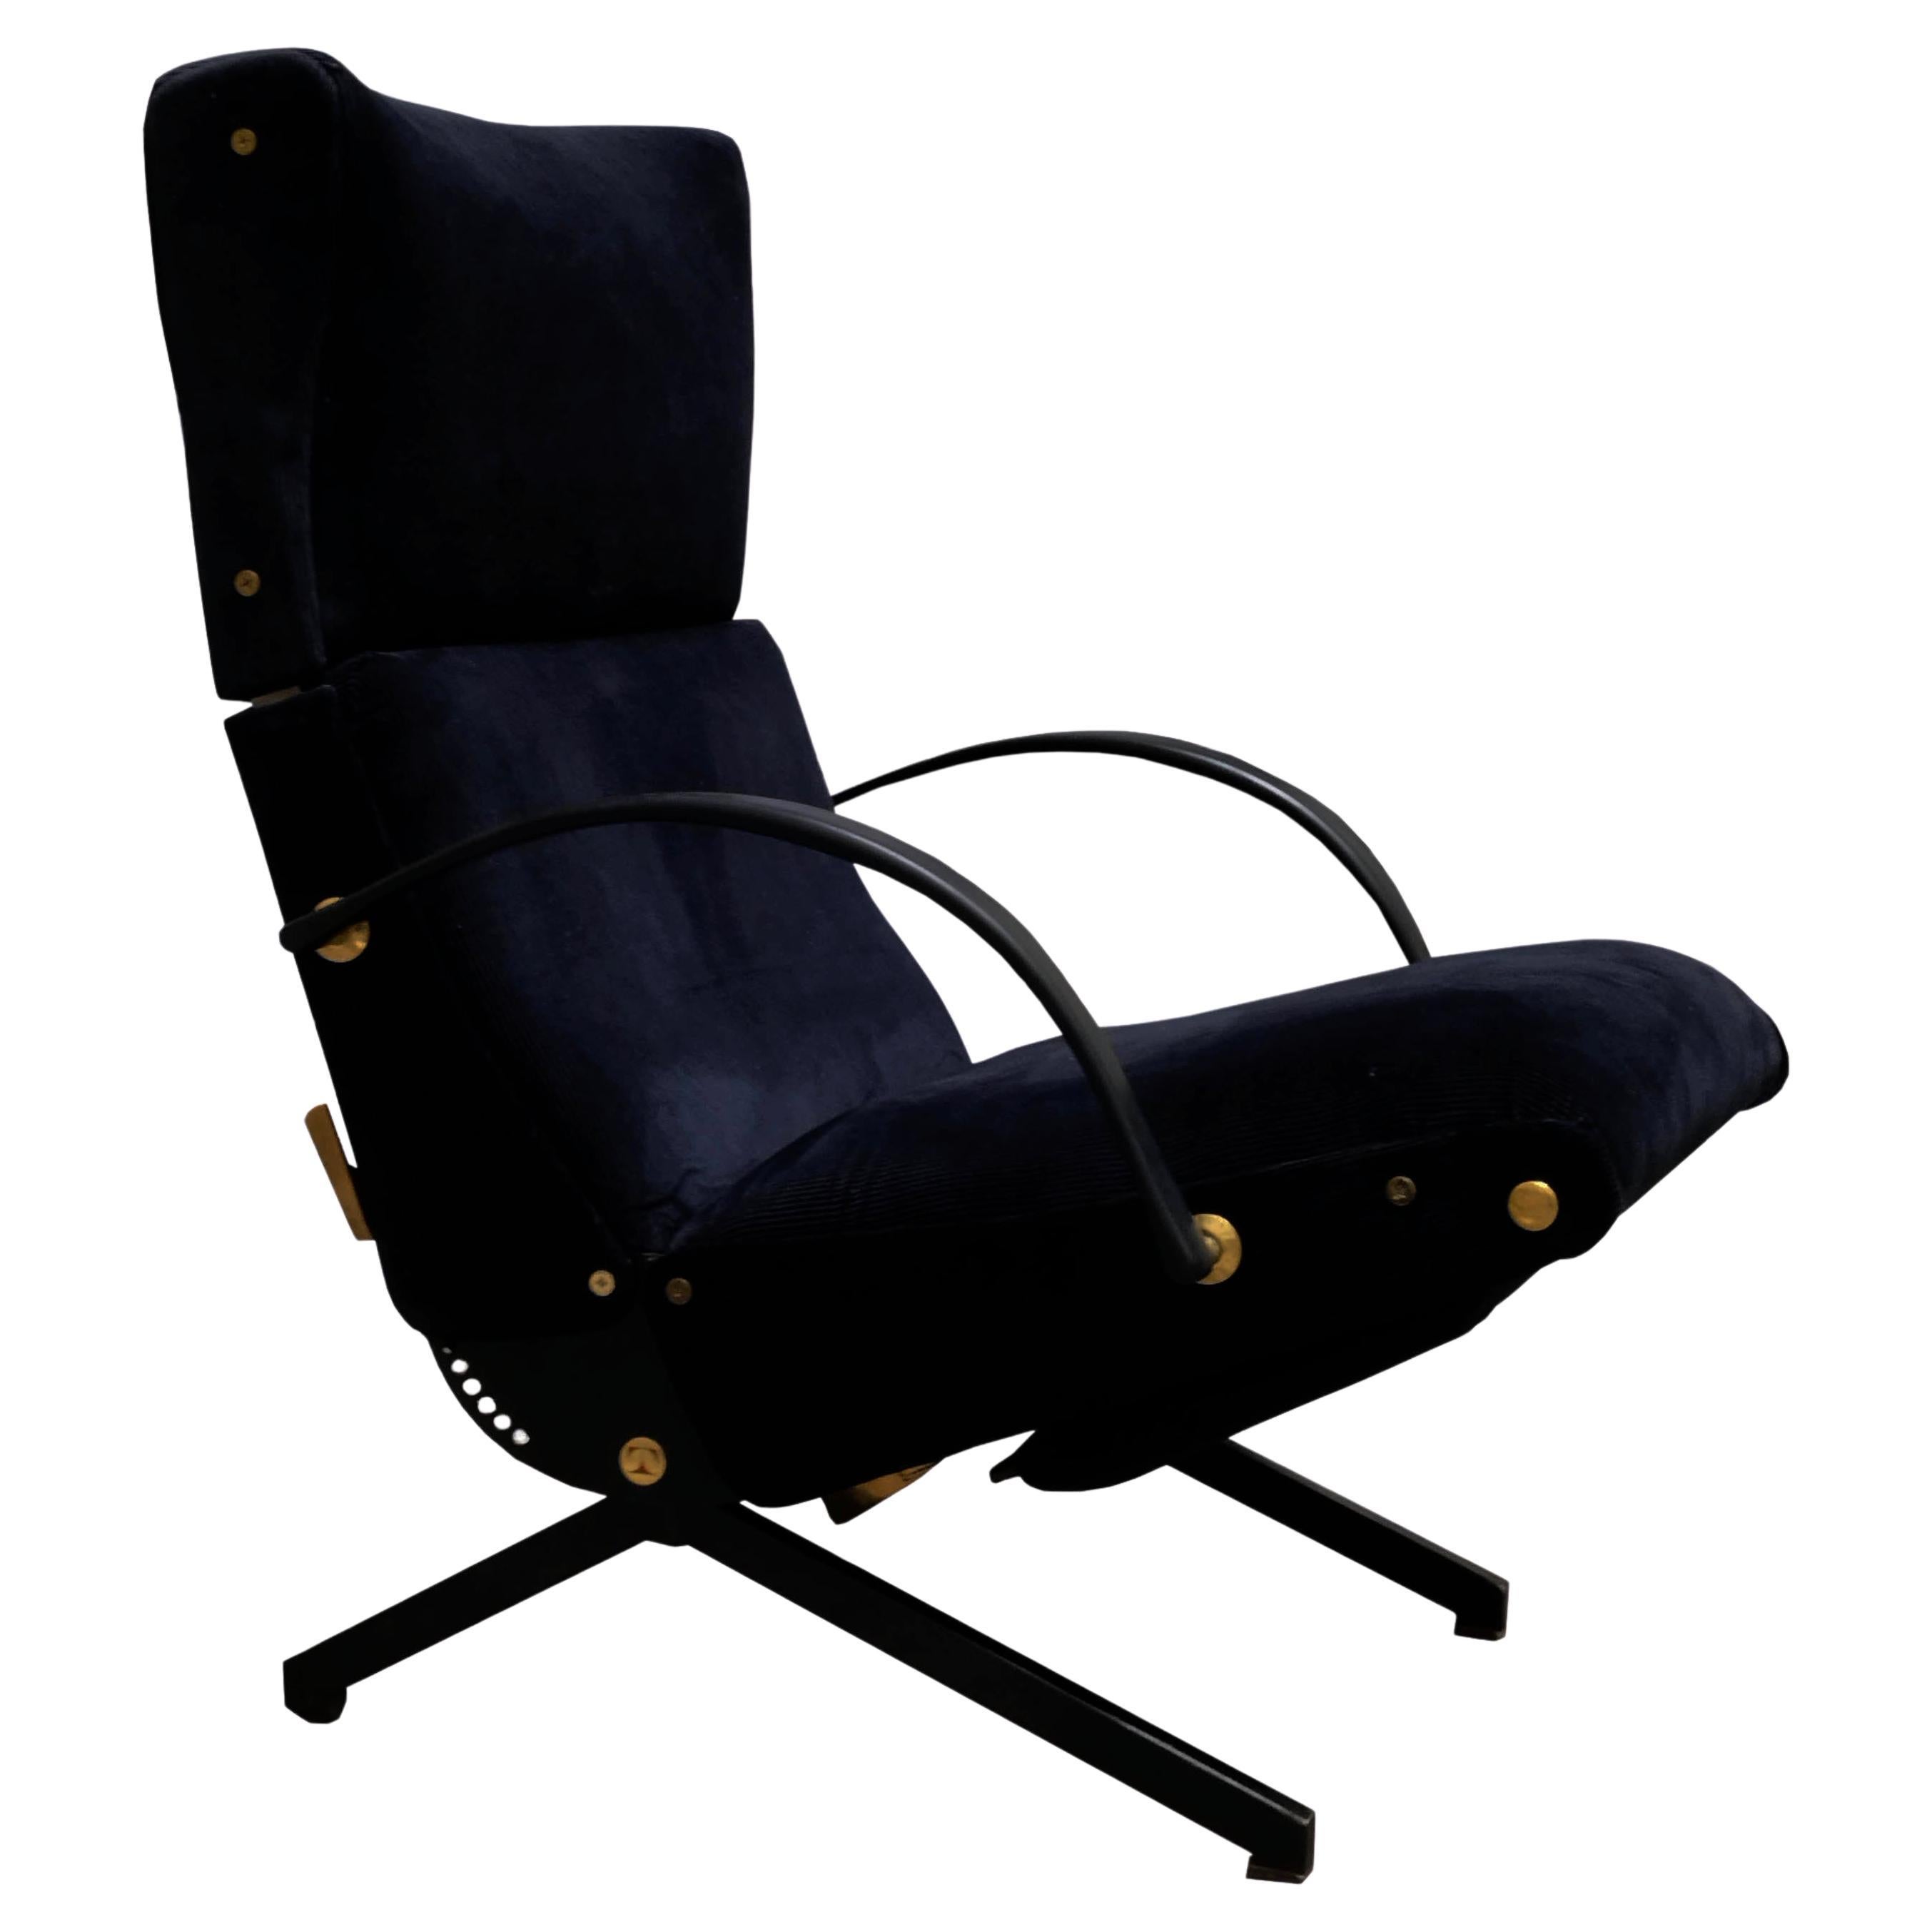 Osvaldo Borsani for Tecno ‘P40' Lounge Chair, Italy, 1955